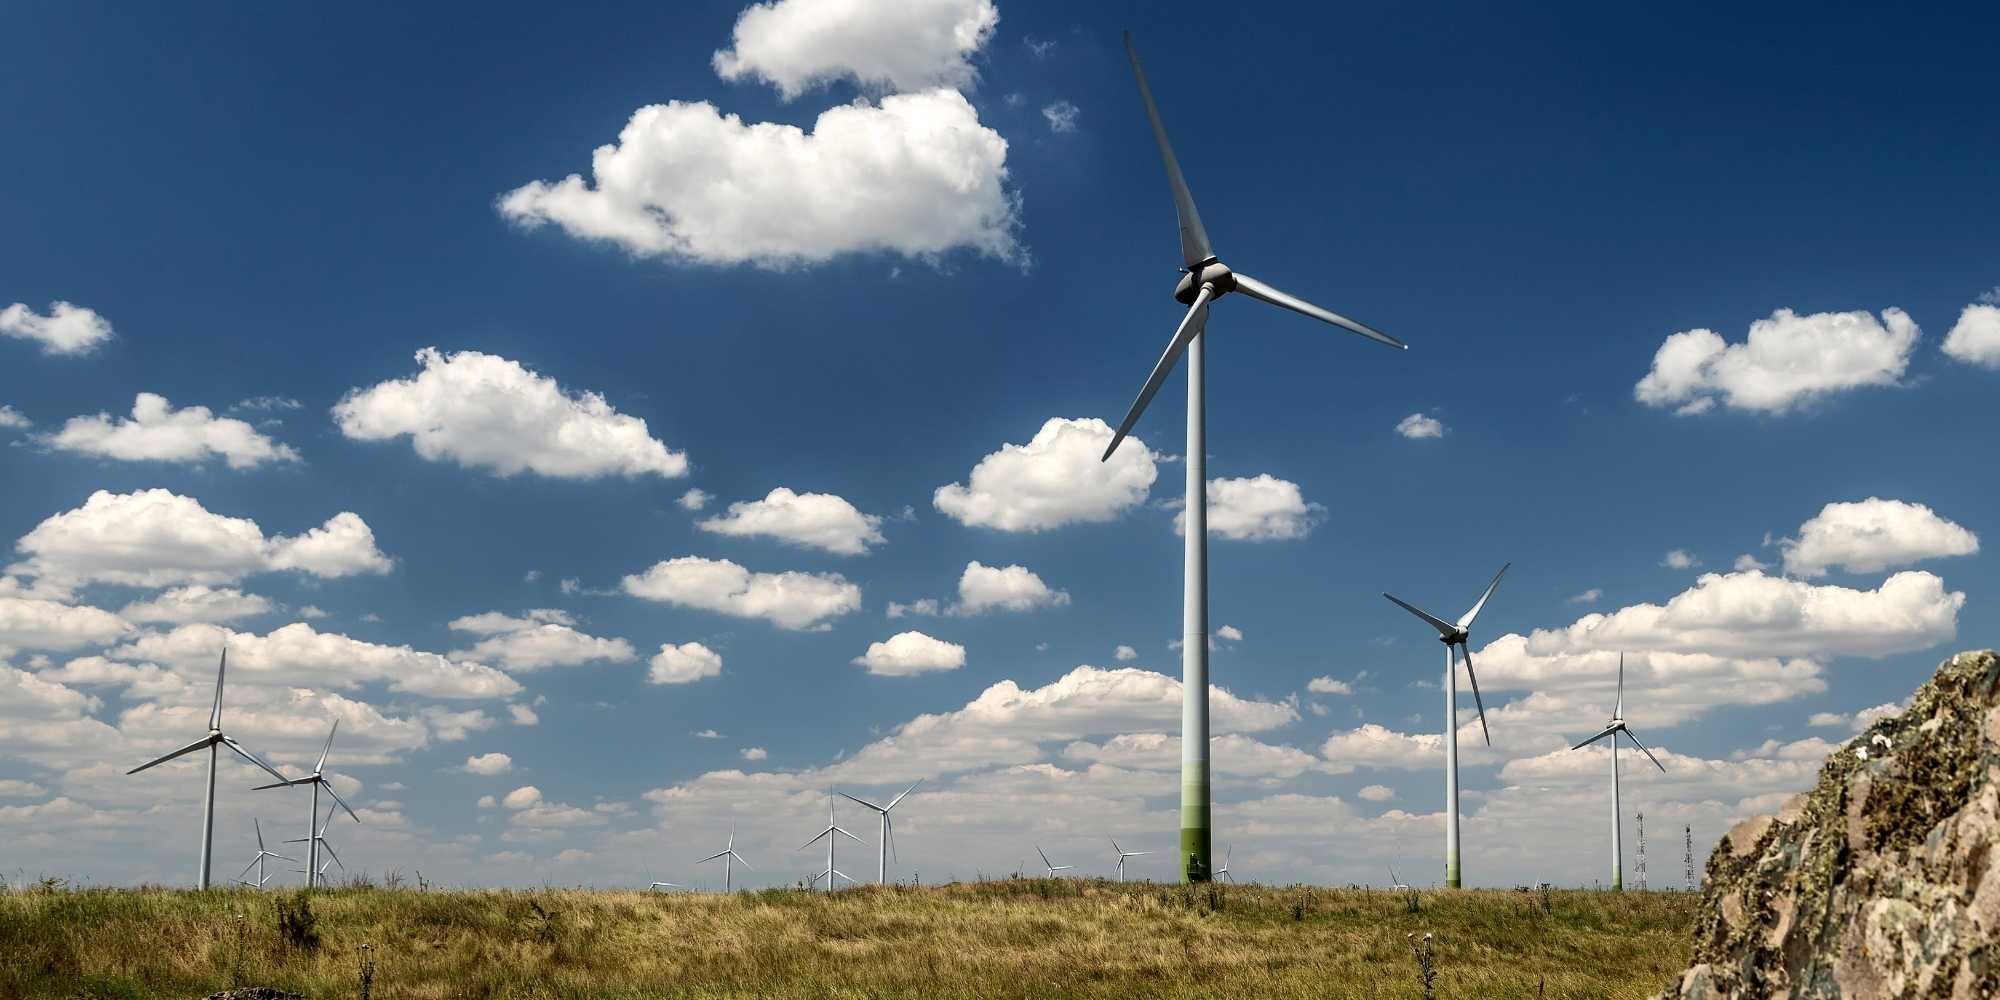 The Romanian renewable energy sector